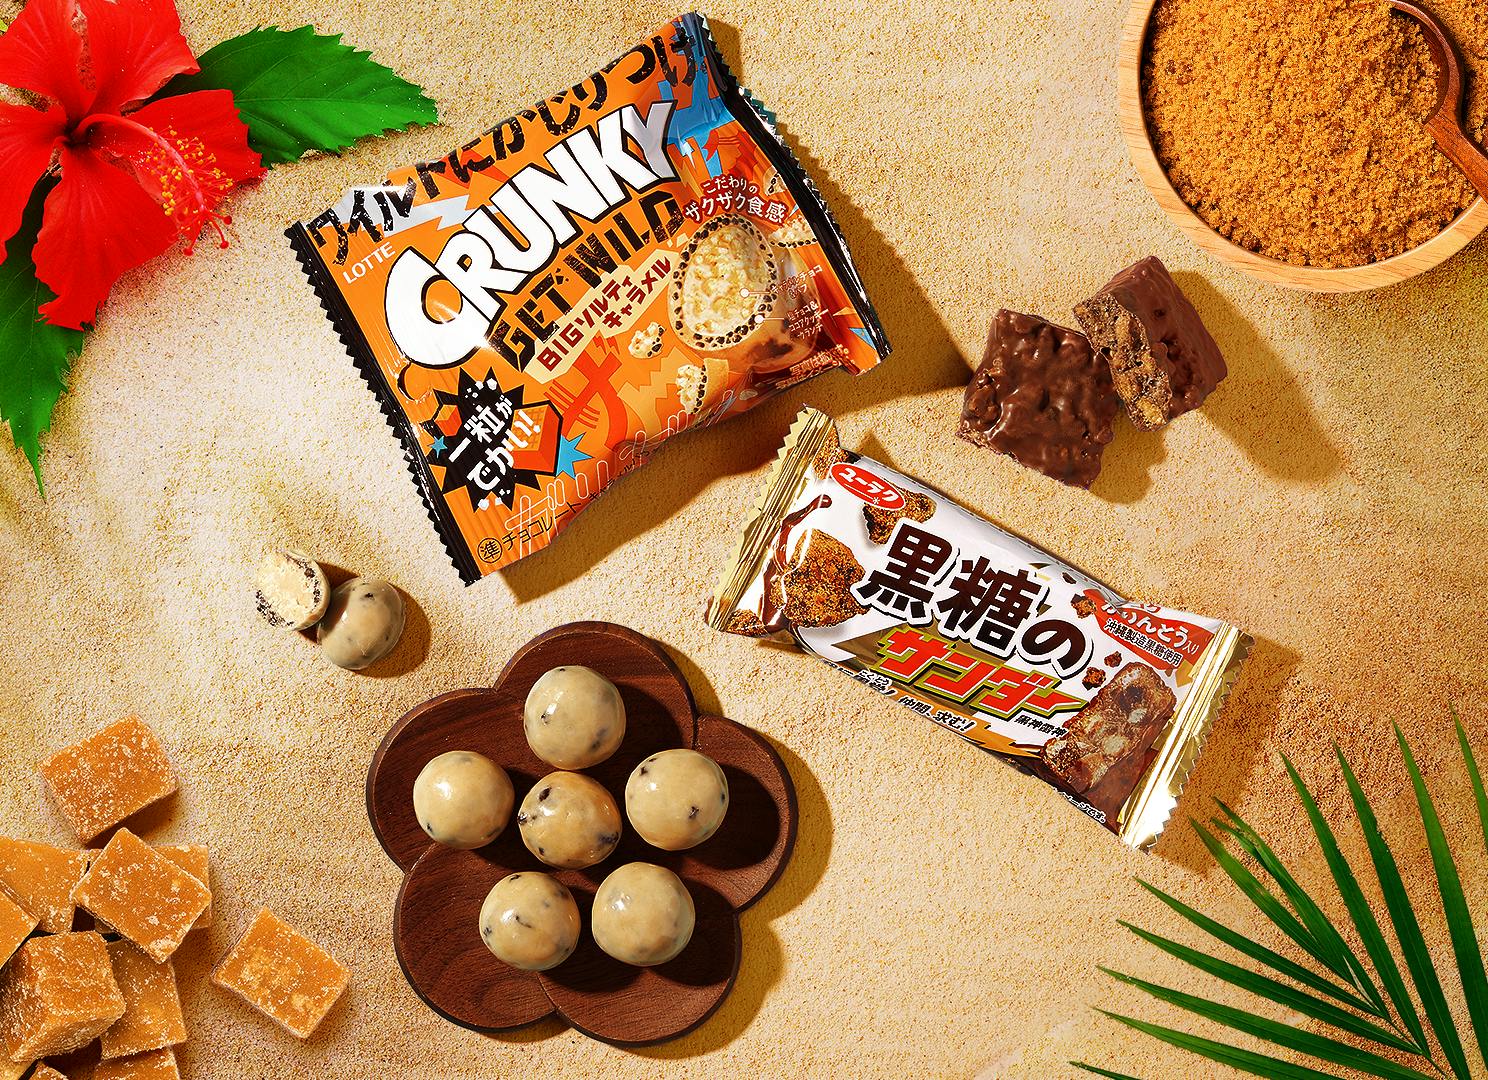 Crunky Salty Caramel Bites and Kokutou Black Thunder snack items sit on an Okinawan beach.